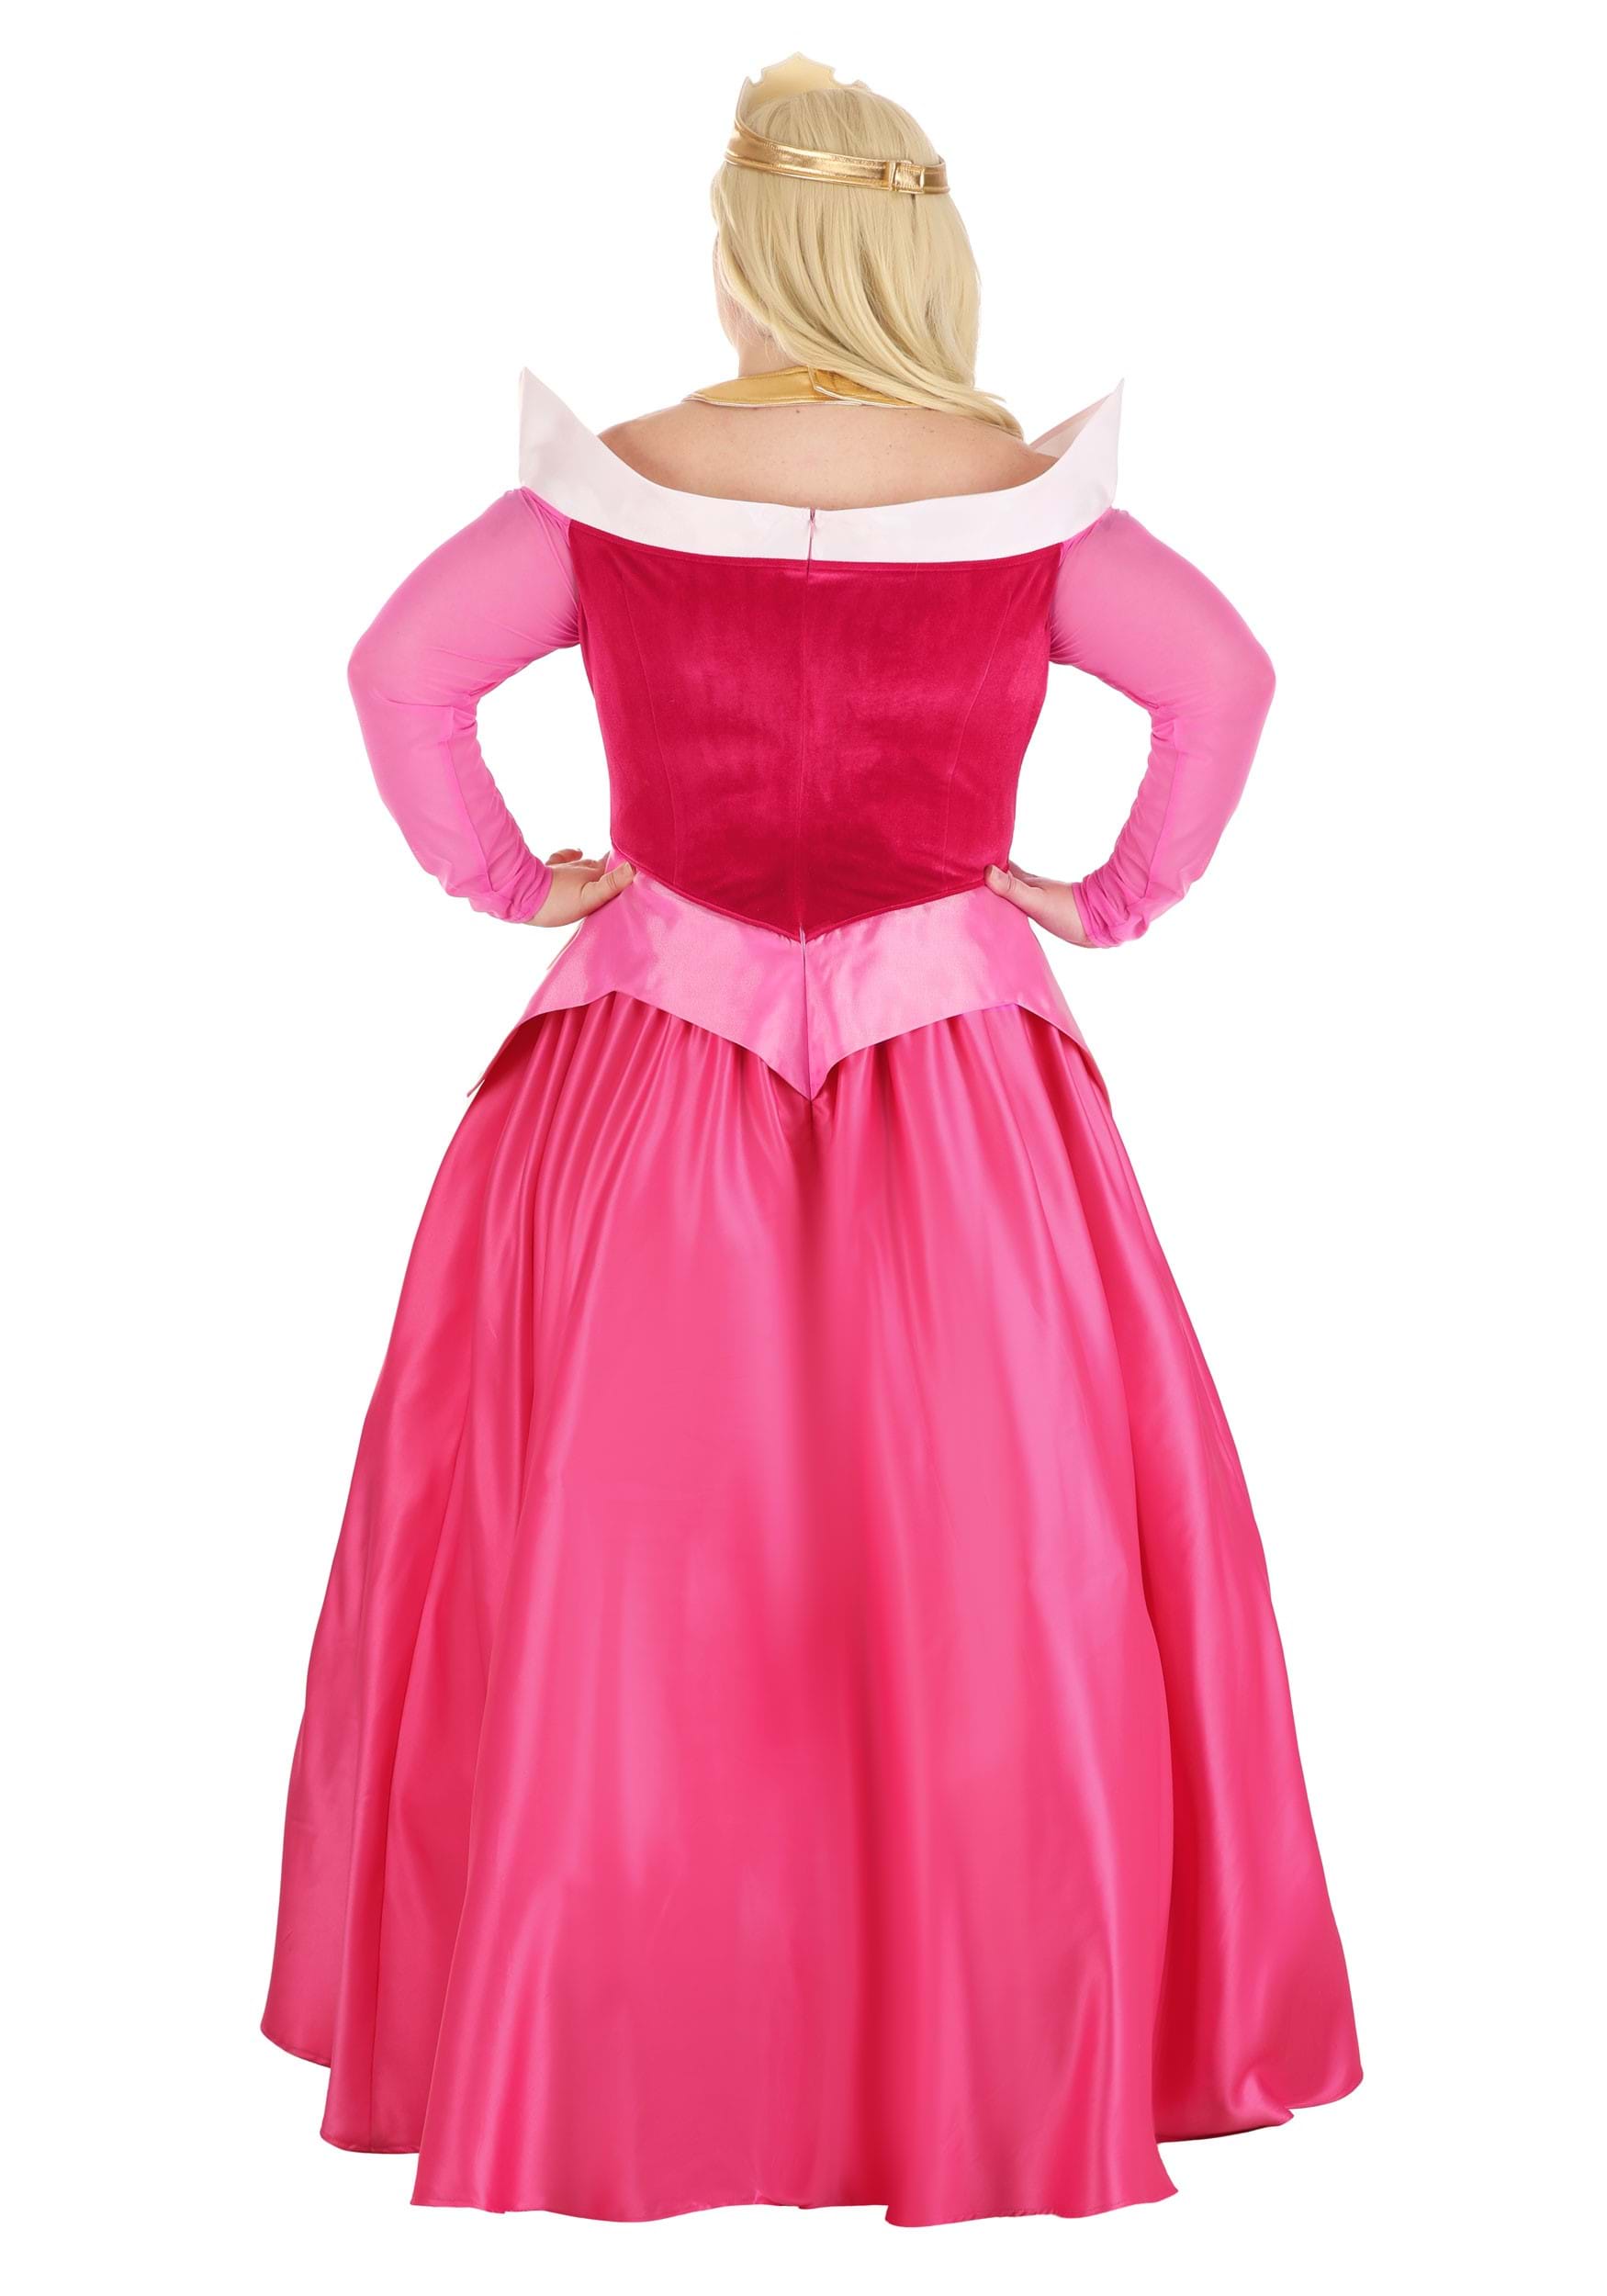 Premium Disney Sleeping Beauty Aurora Costume for Women